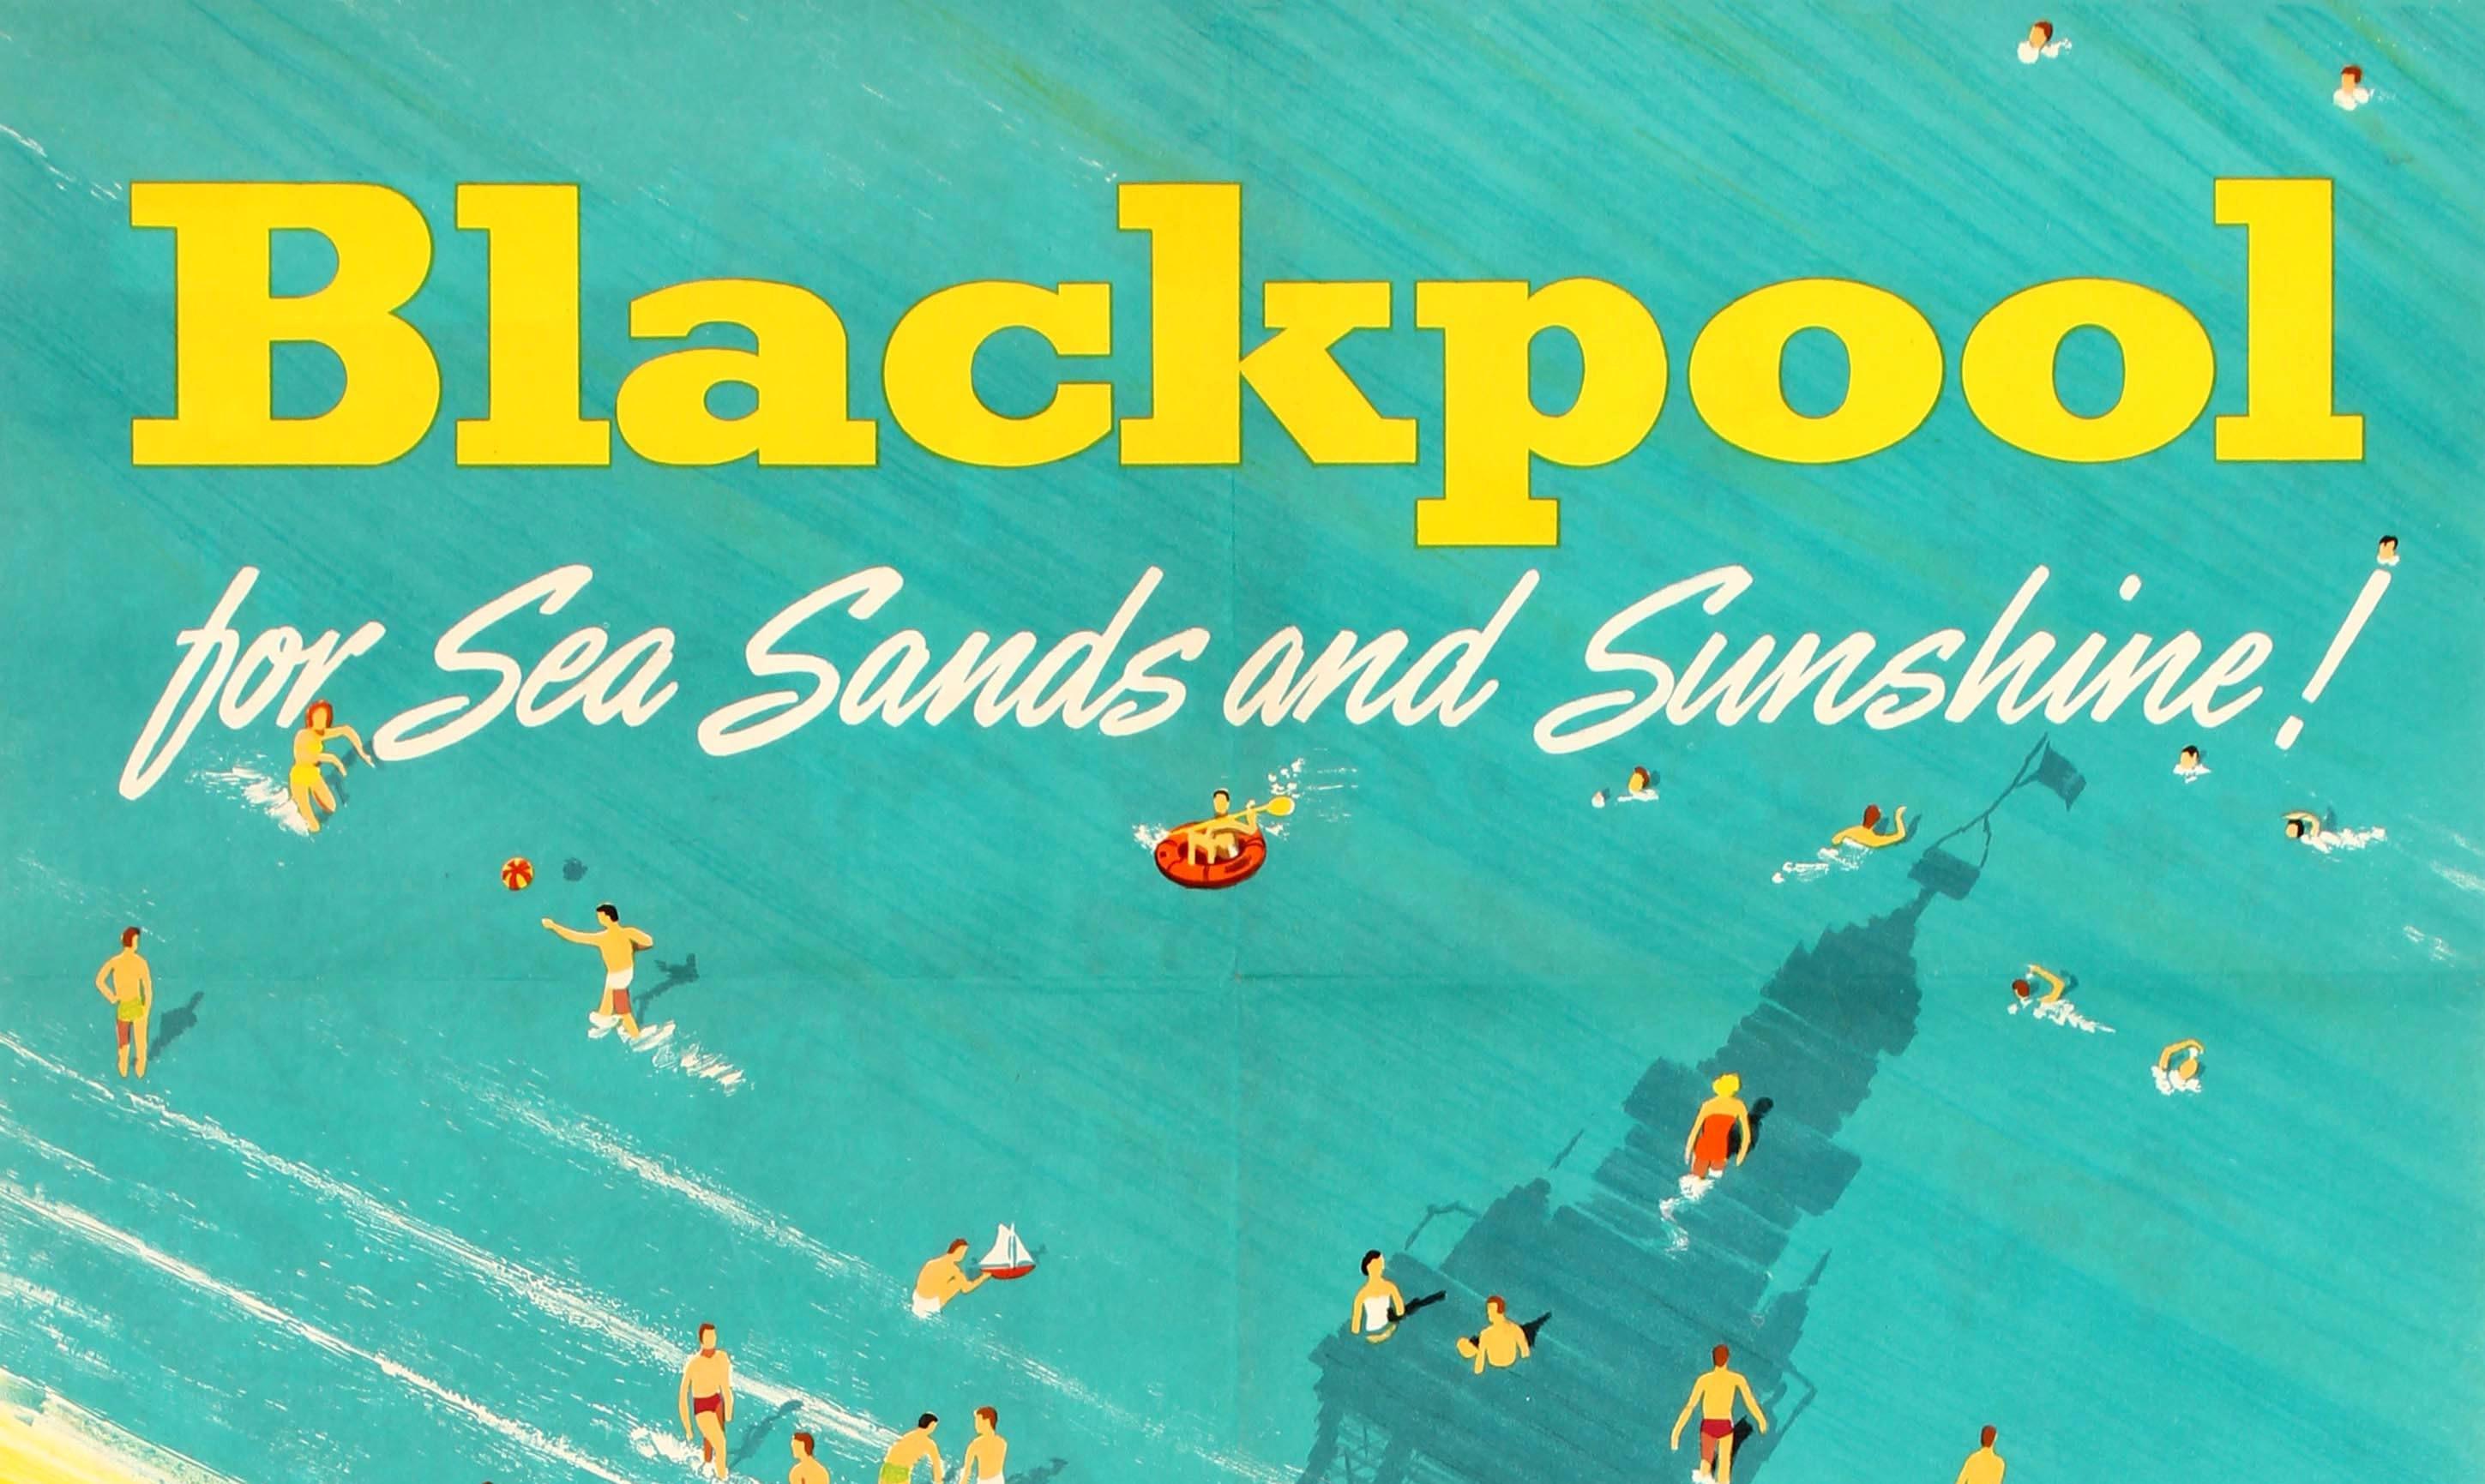 Original Vintage British Railways Poster - Blackpool for Sea Sands and Sunshine! - Print by Studio Seven